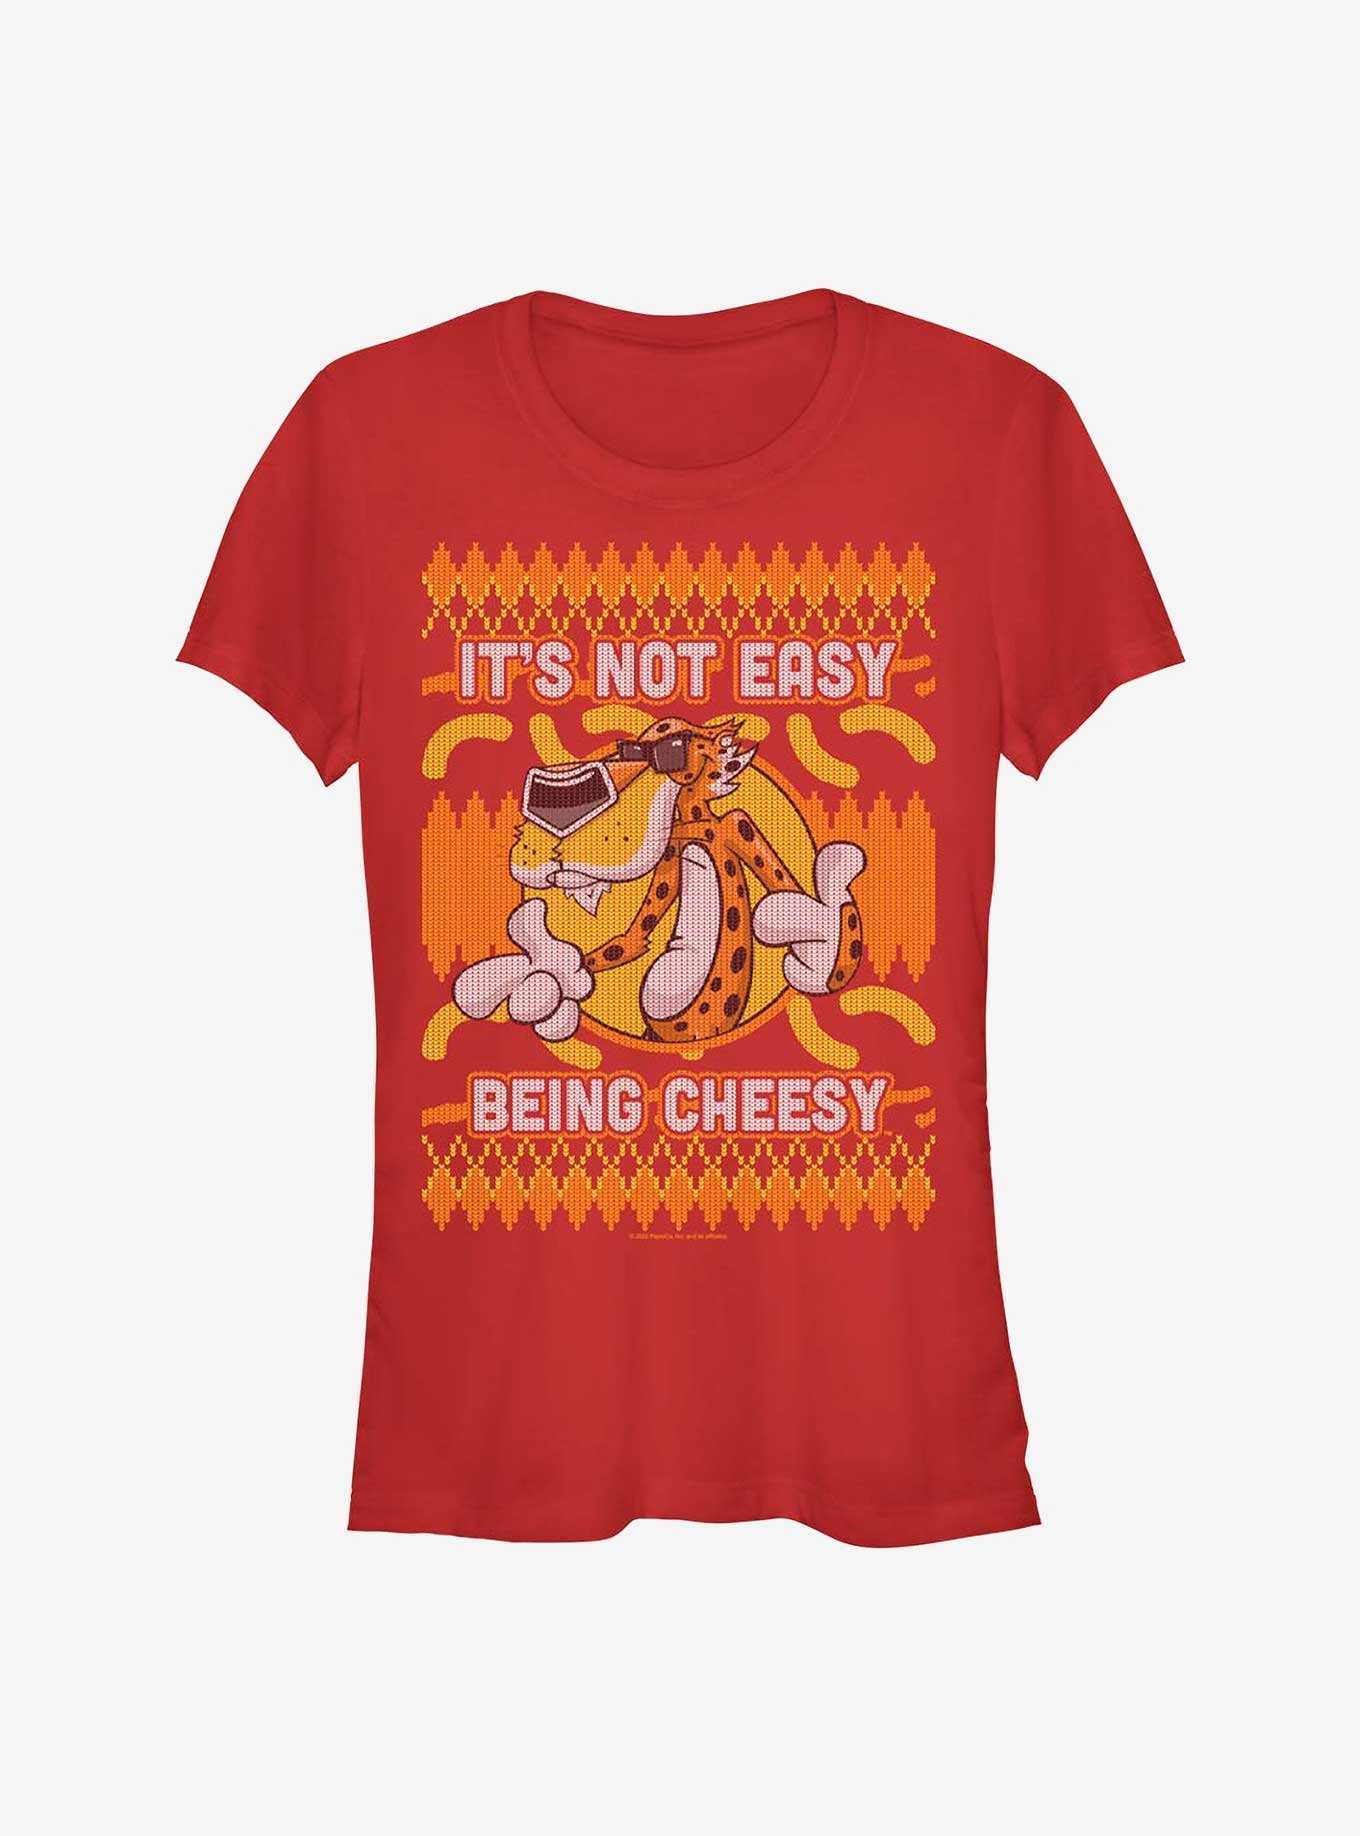 Cheetos Chester Cheetah Ugly Christmas Sweater Pattern Girls T-Shirt, , hi-res